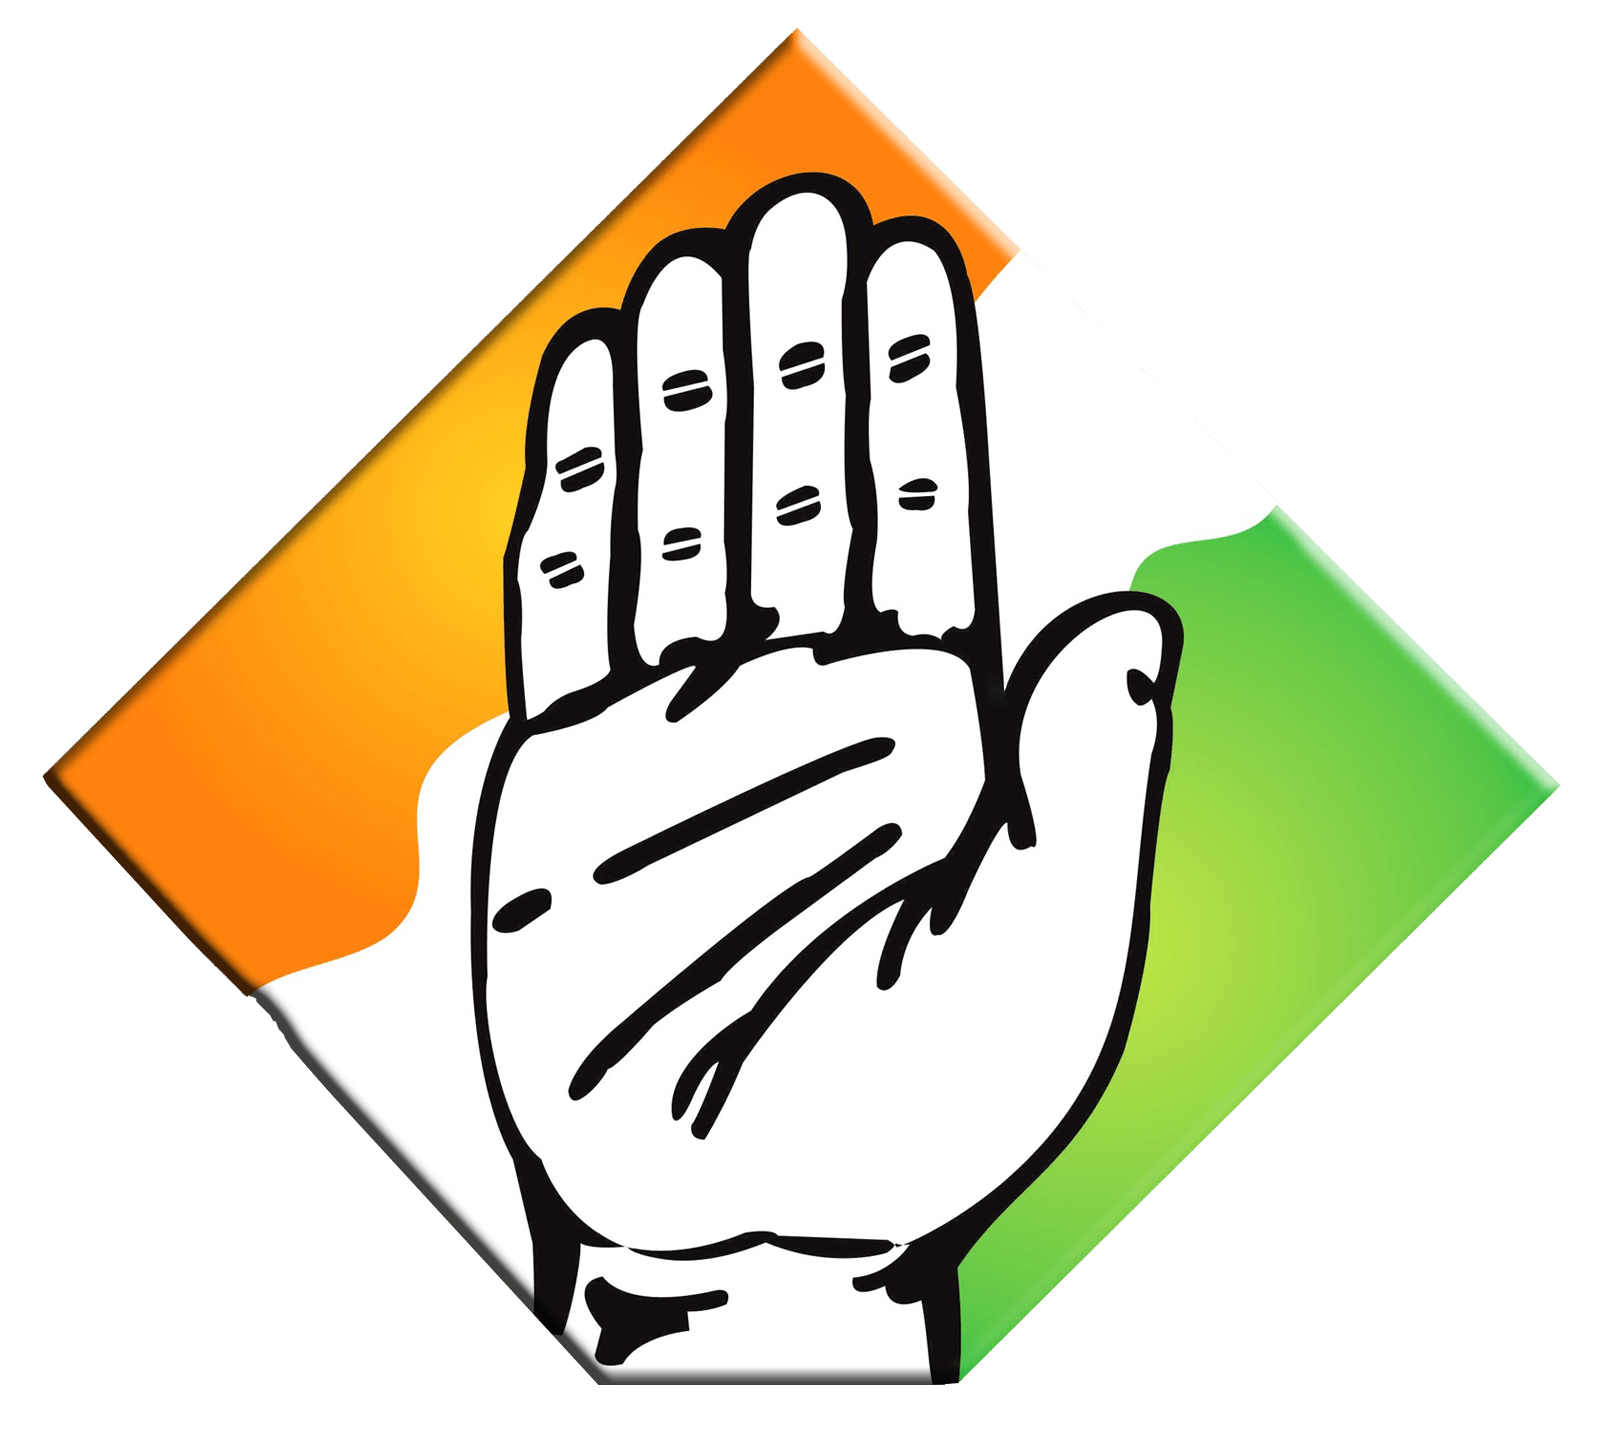 Congress Logo - Congress Logo PNG Free Download